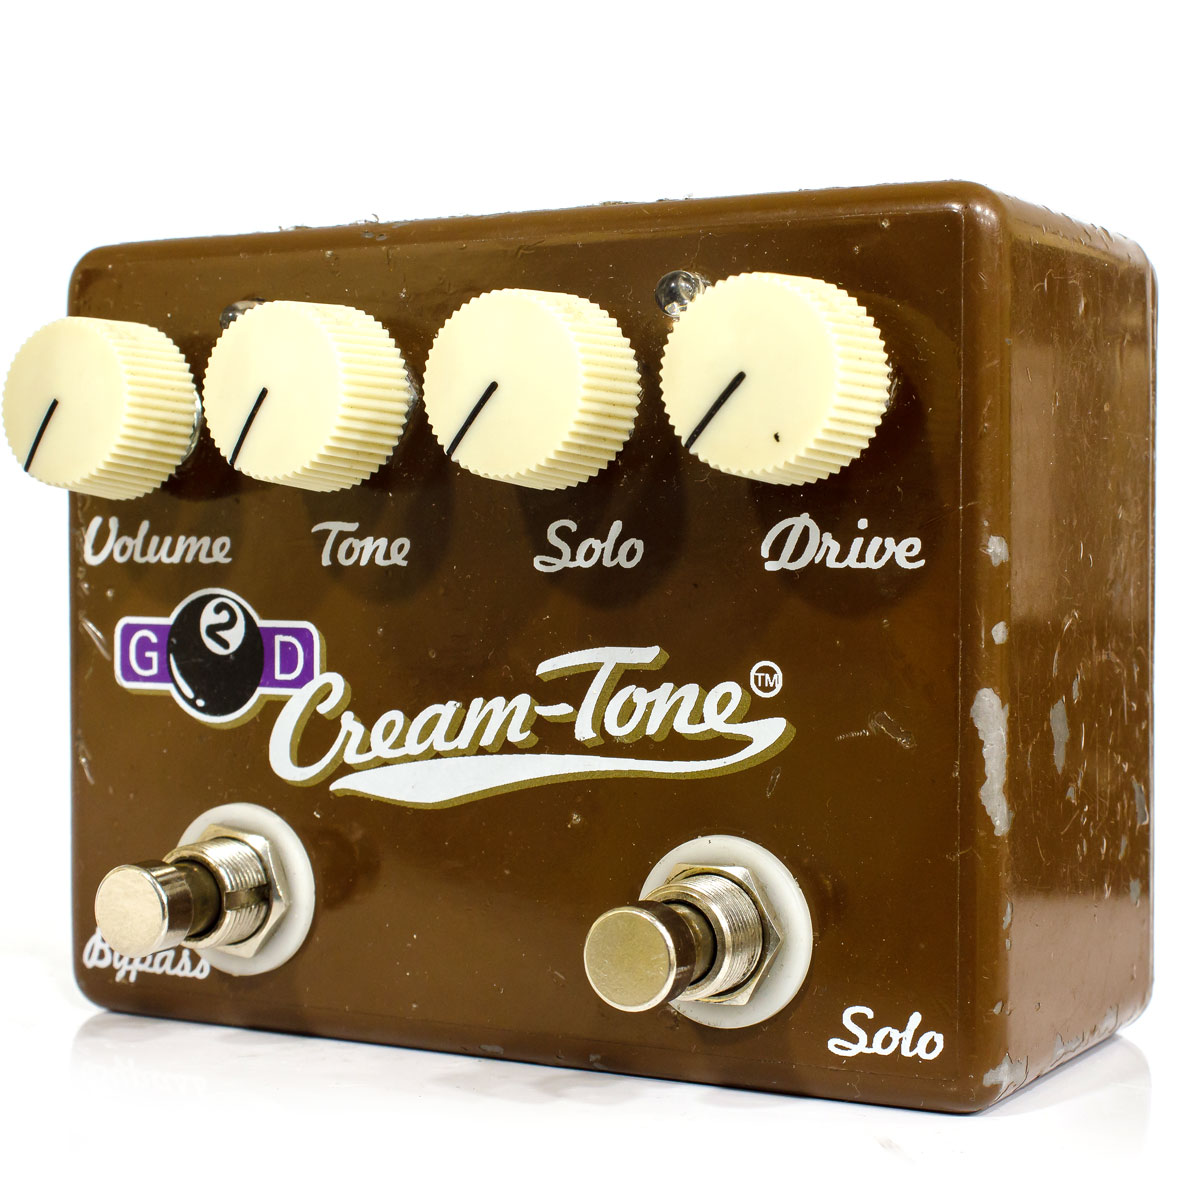 Б/у G2D Cream Tone Overdrive (used) - купить в интернет магазине